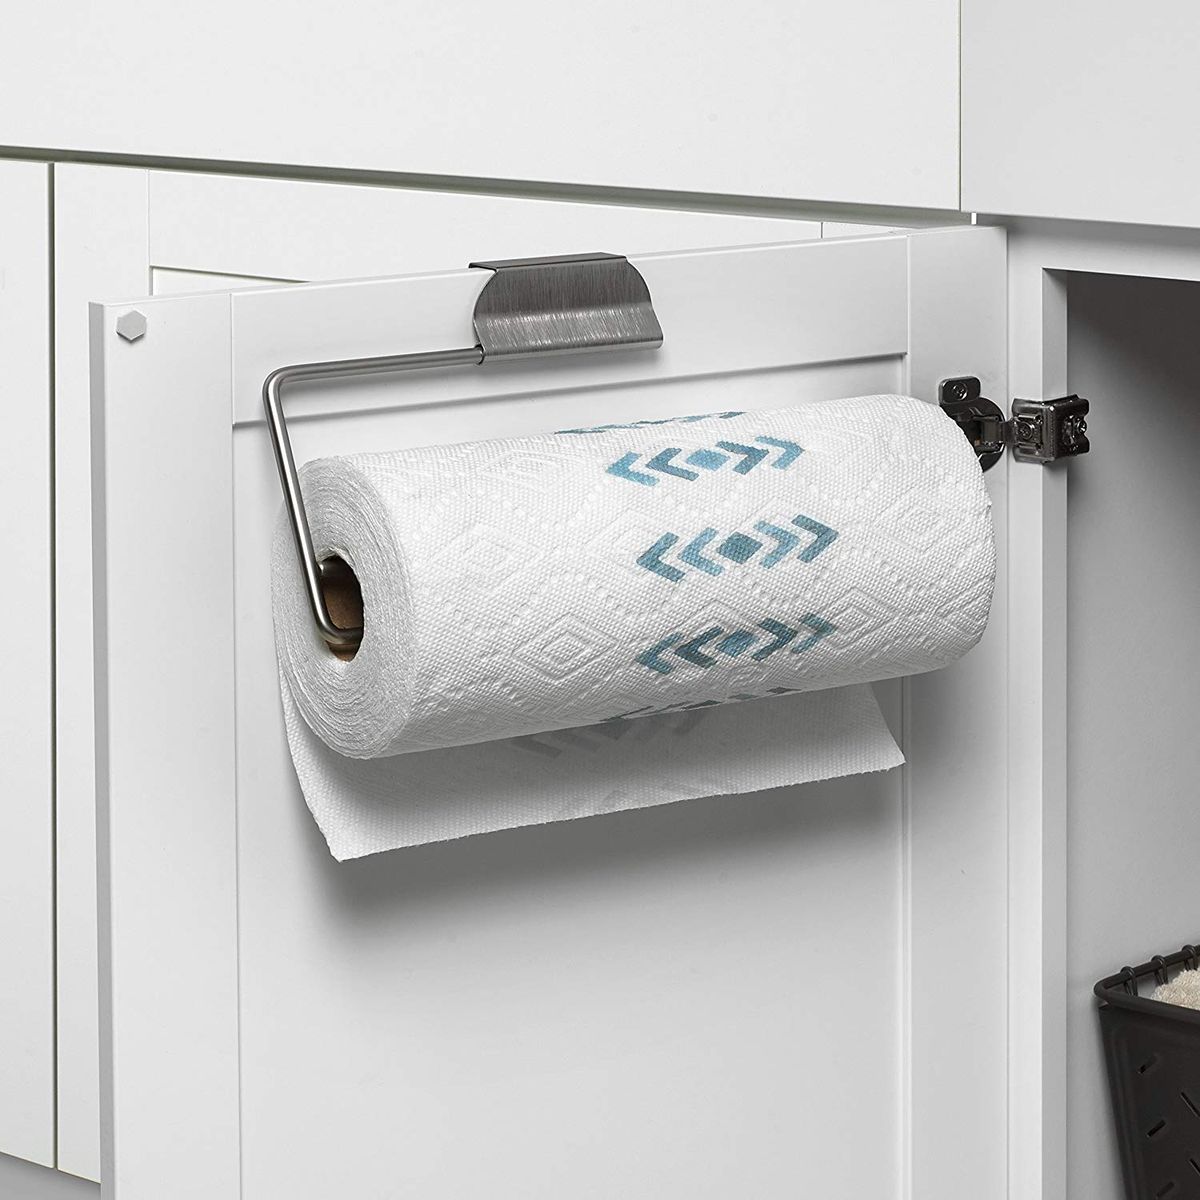 Self-adhesive Towel Holder Rack Wall Mounted Towel Hanger Bathroom Towel Bar She